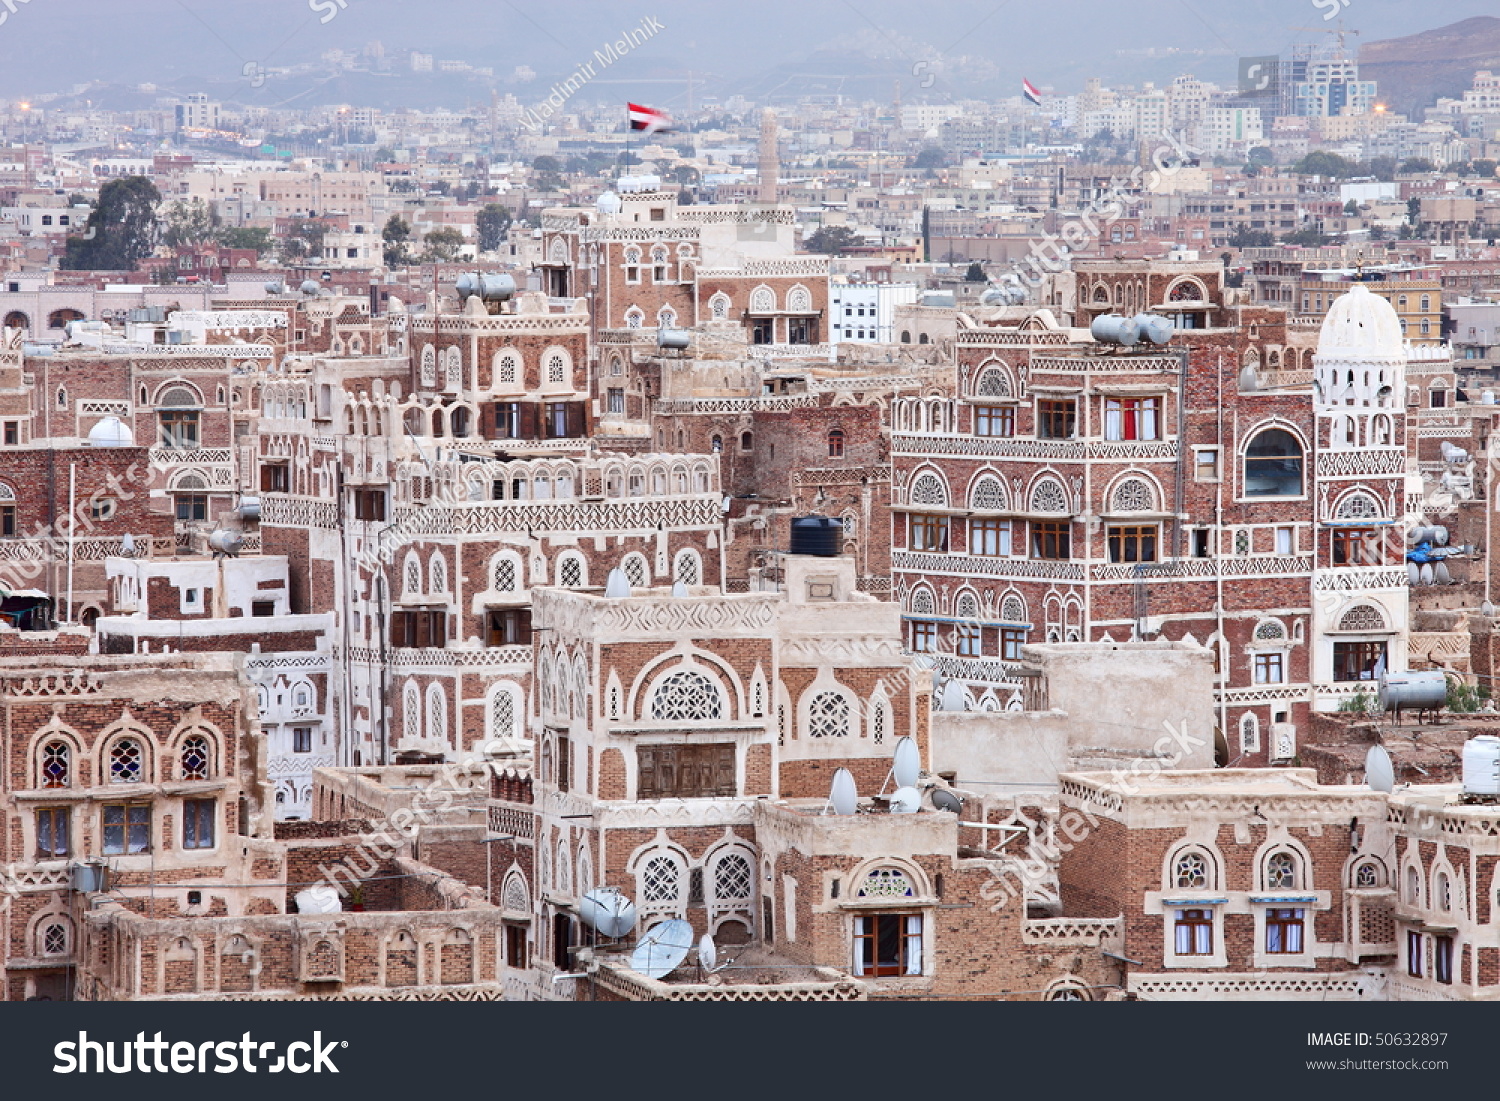 Old Sanaa buildings - traditional Yemen house #50632897